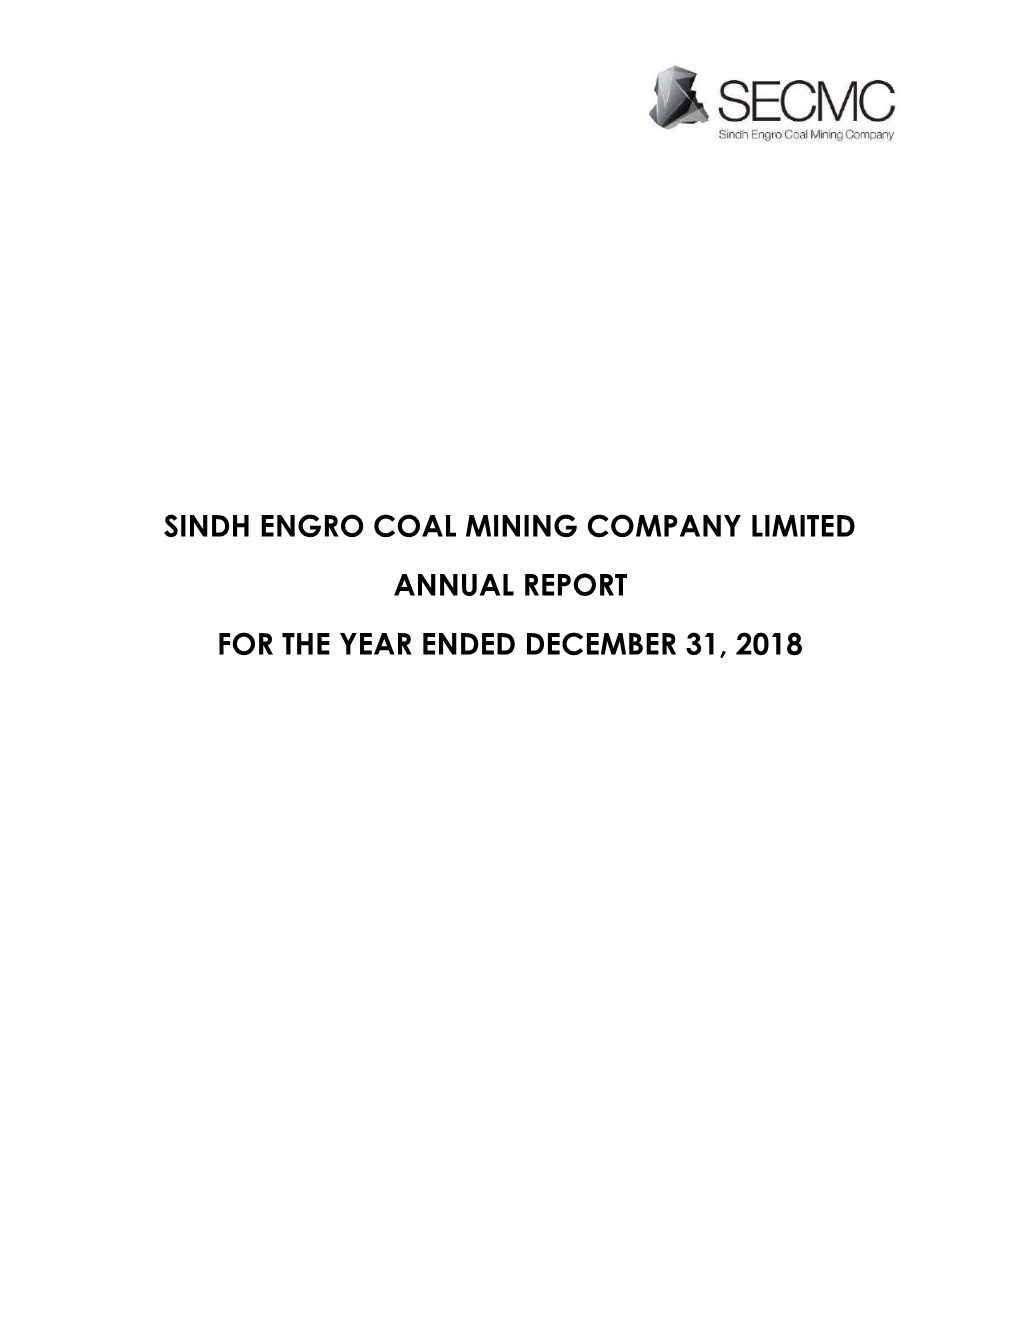 SECMC Annual Report Dec 2018